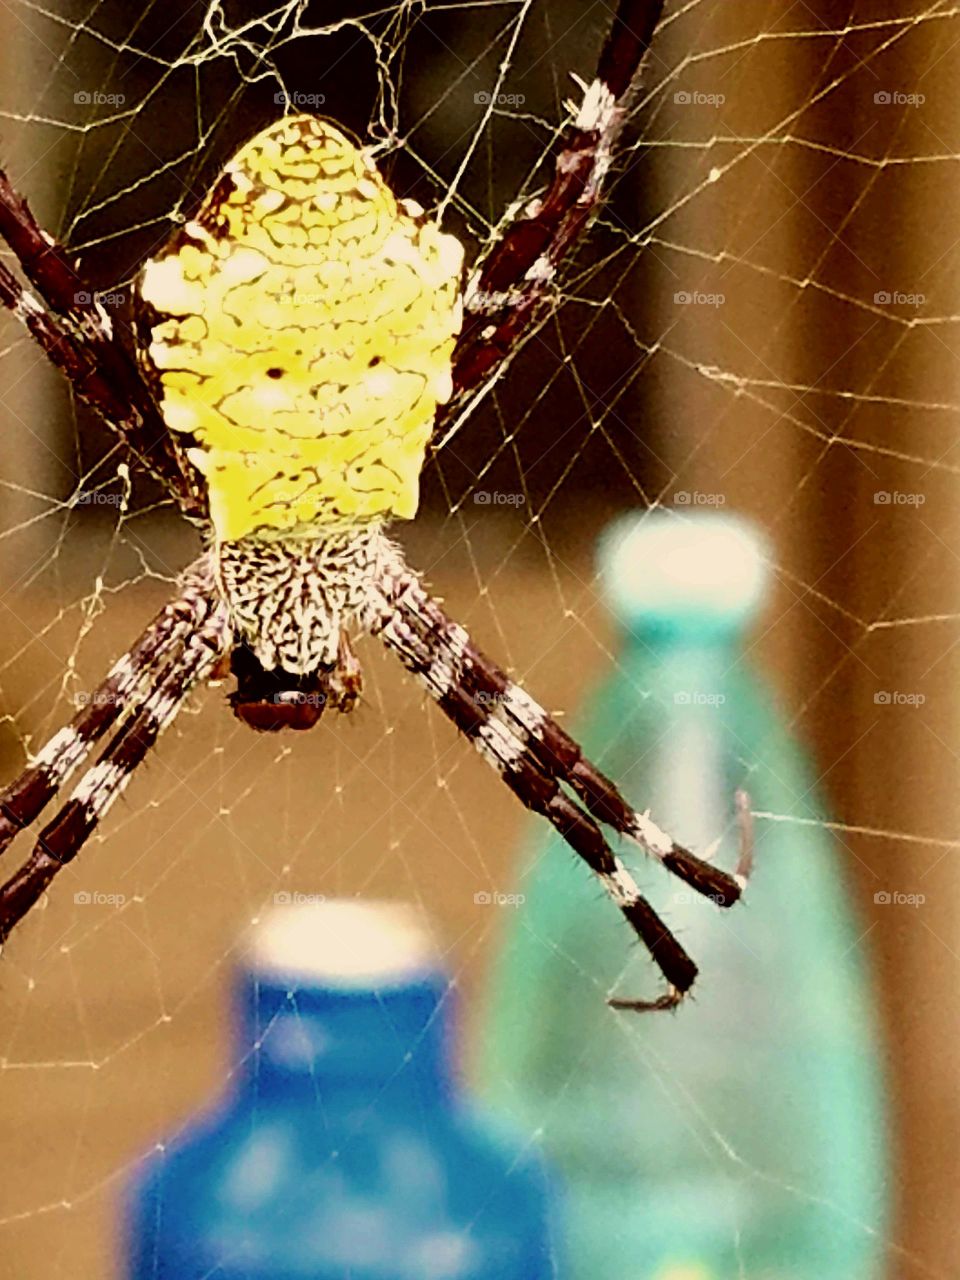 Spider, Arachnid, Spiderweb, Cobweb, Trap